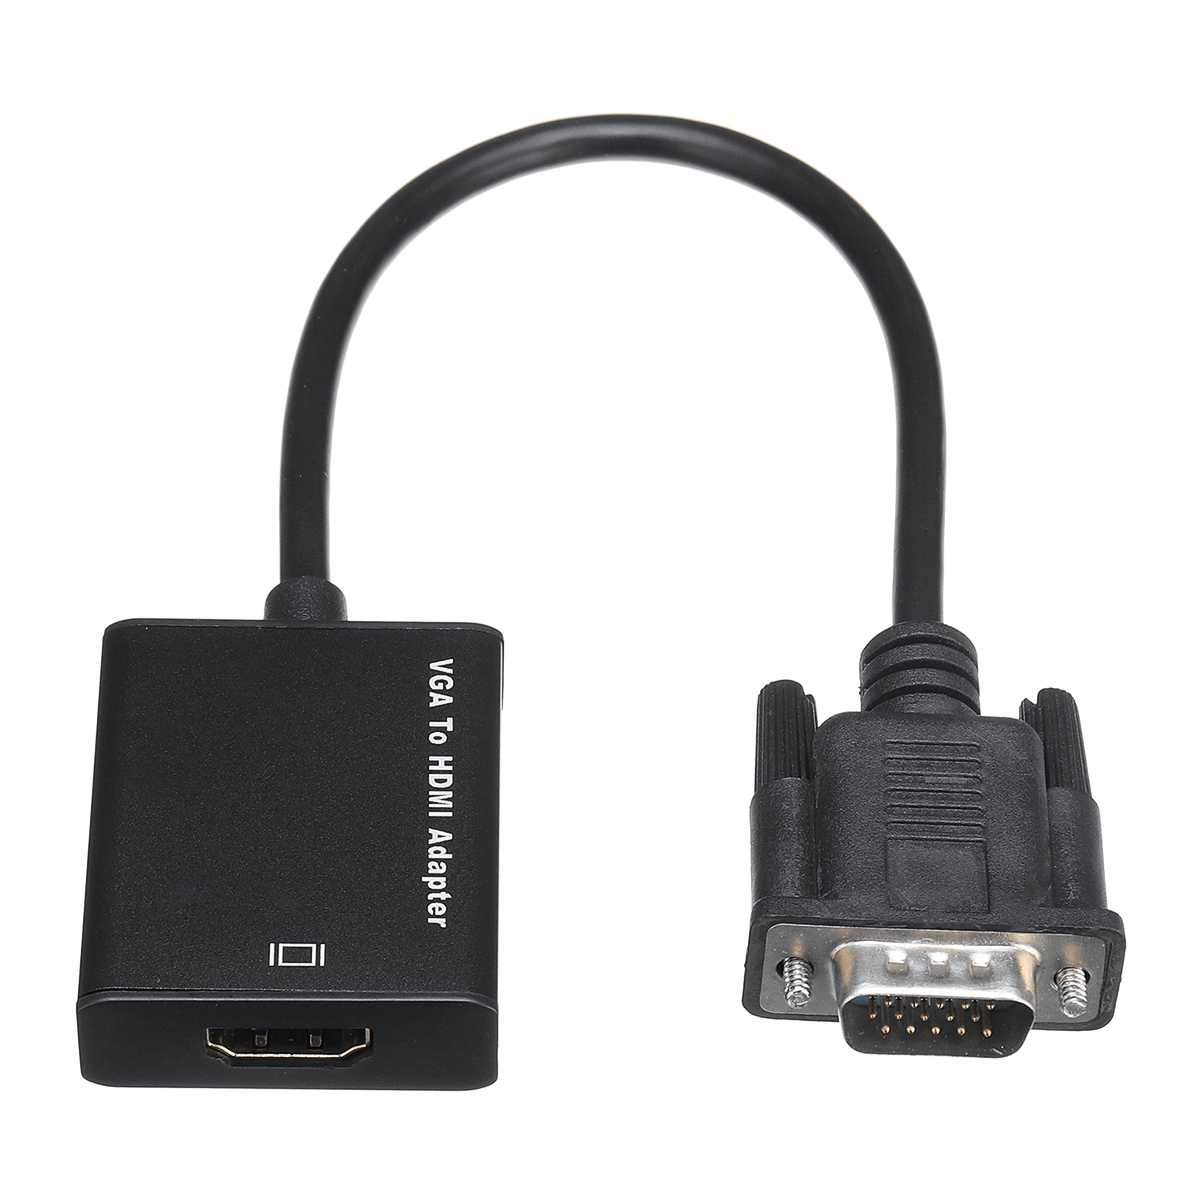 Переходник vga телевизор. Переходник (адаптер) VGA-HDMI. Адаптер ВГА на HDMI. Переходник VGA-HDMI ot-avw21. Переходник ВГА В HDMI для монитора.